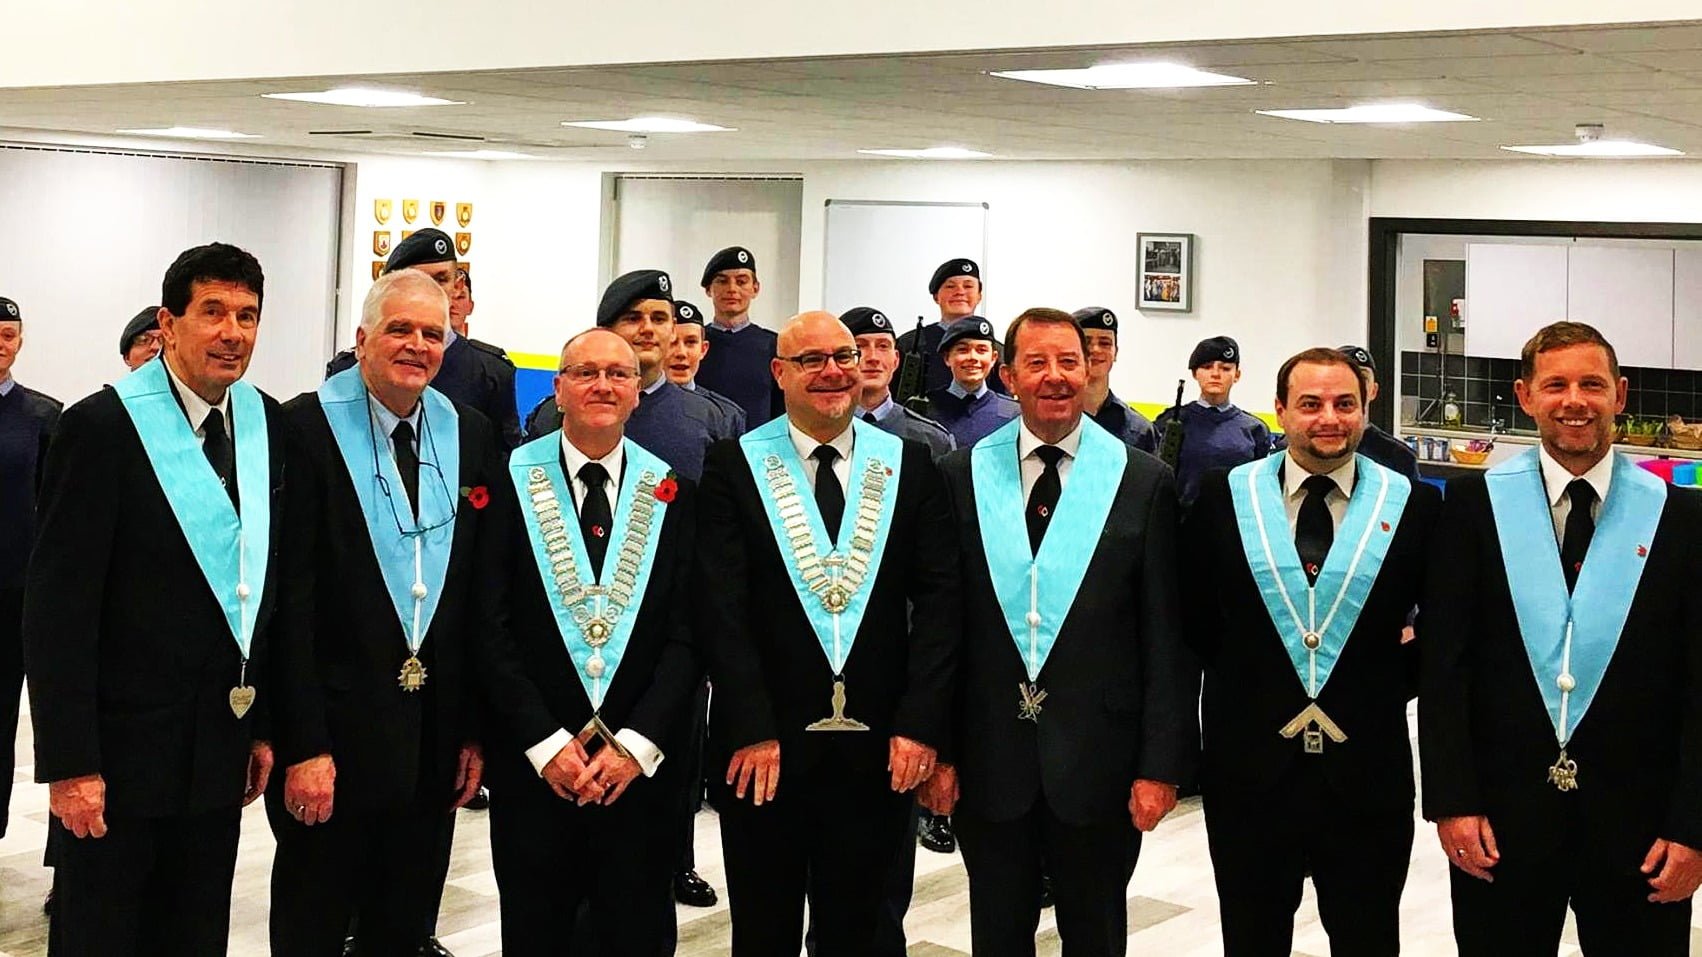 Derbyshire Freemasons donate £2,500 126 Squadron (City of Derby) RAF Air Cadets